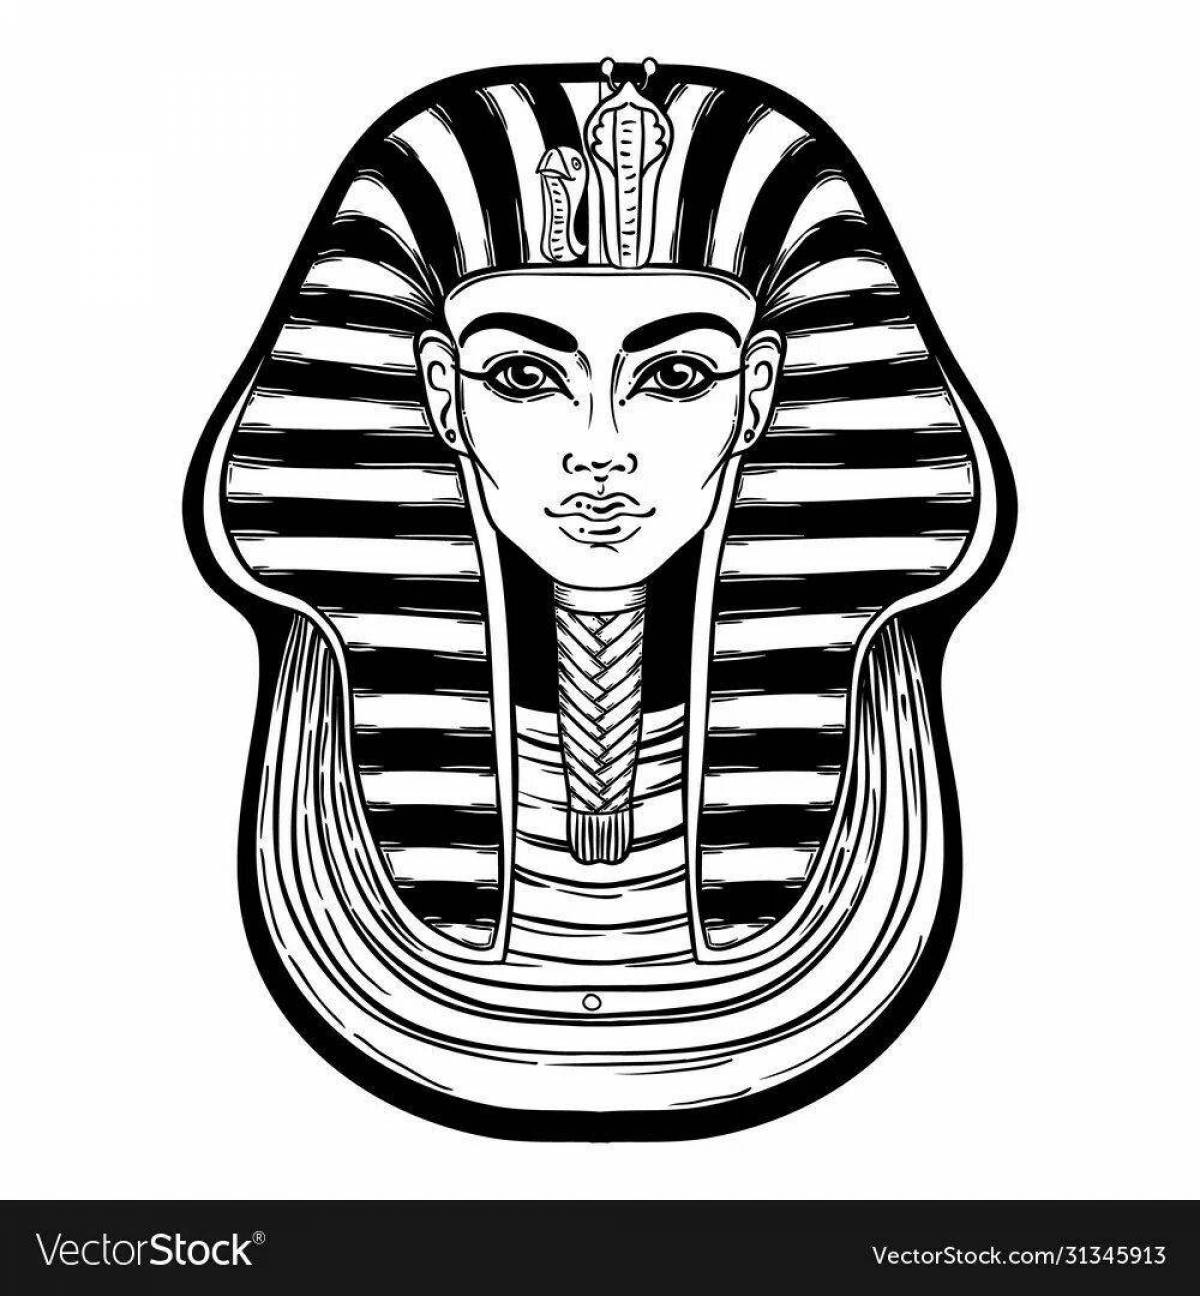 Coloring page majestic mask of Pharaoh Tutankhamun